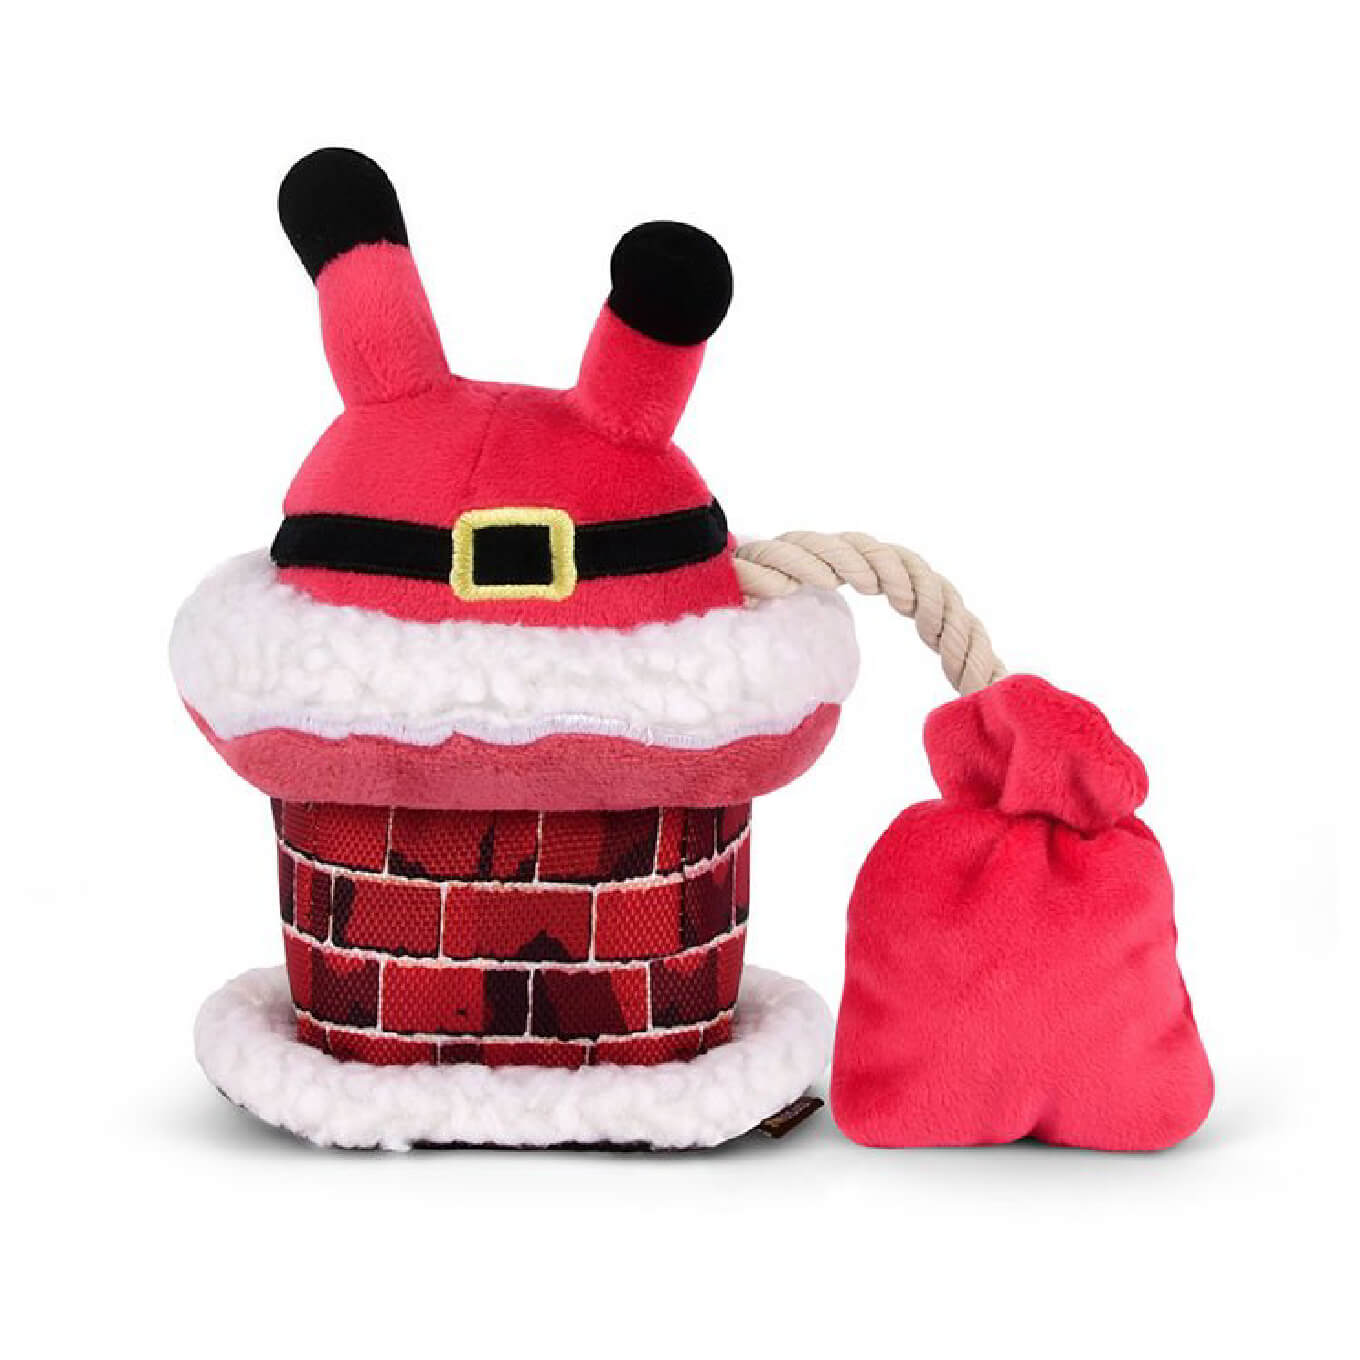 PLAY Merry Woofmas Santa Claus Toy - Vanillapup Online Pet Store